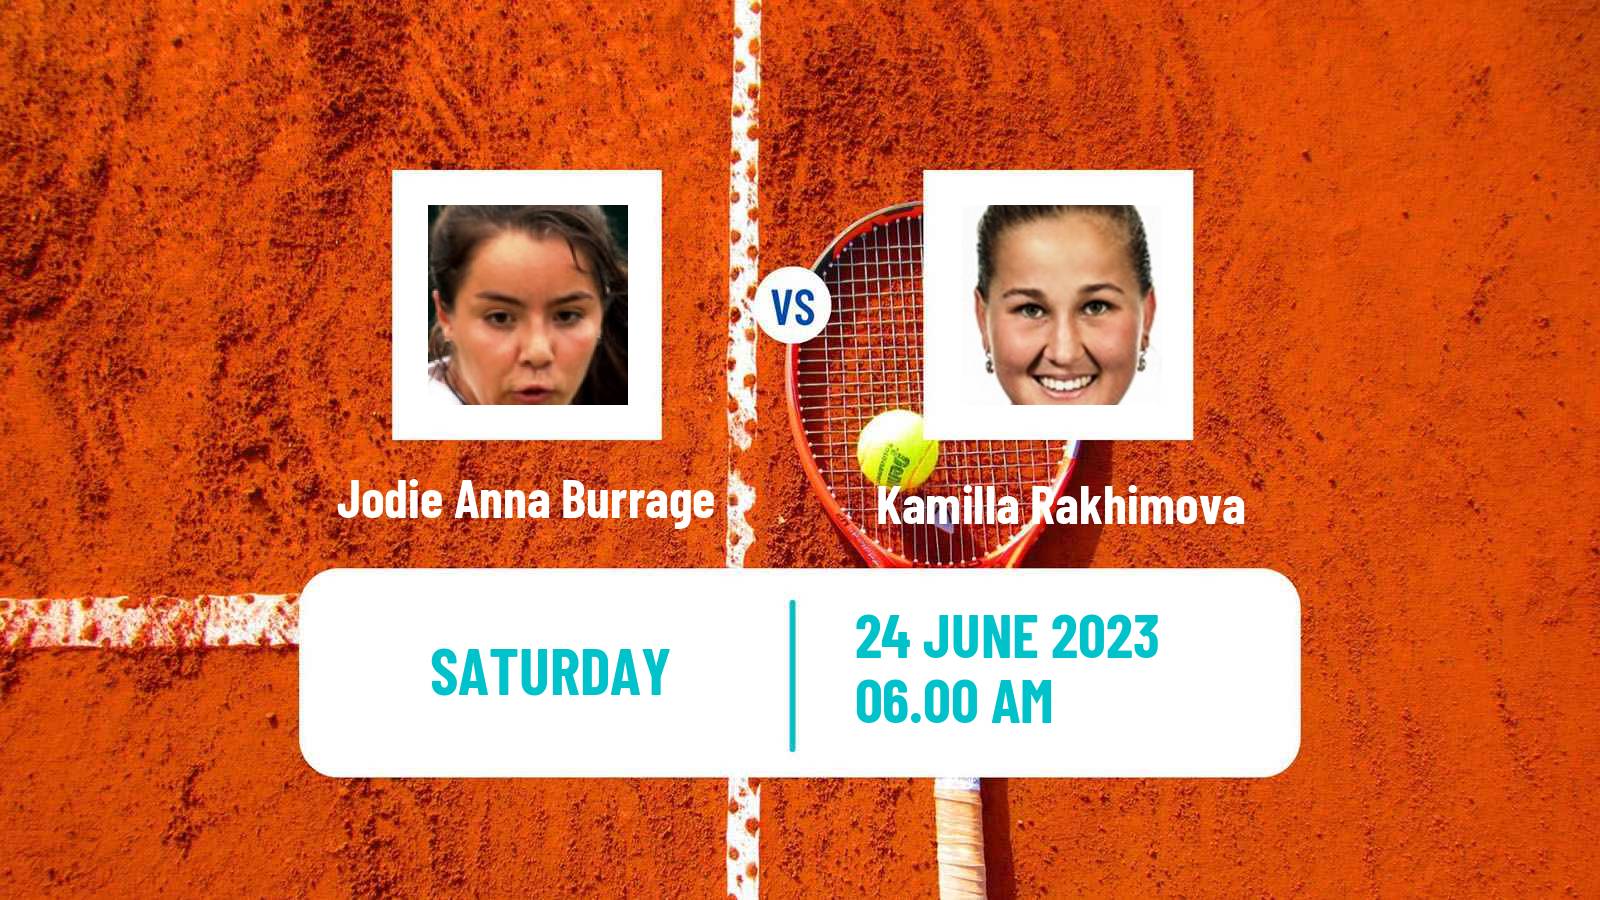 Tennis WTA Eastbourne Jodie Anna Burrage - Kamilla Rakhimova